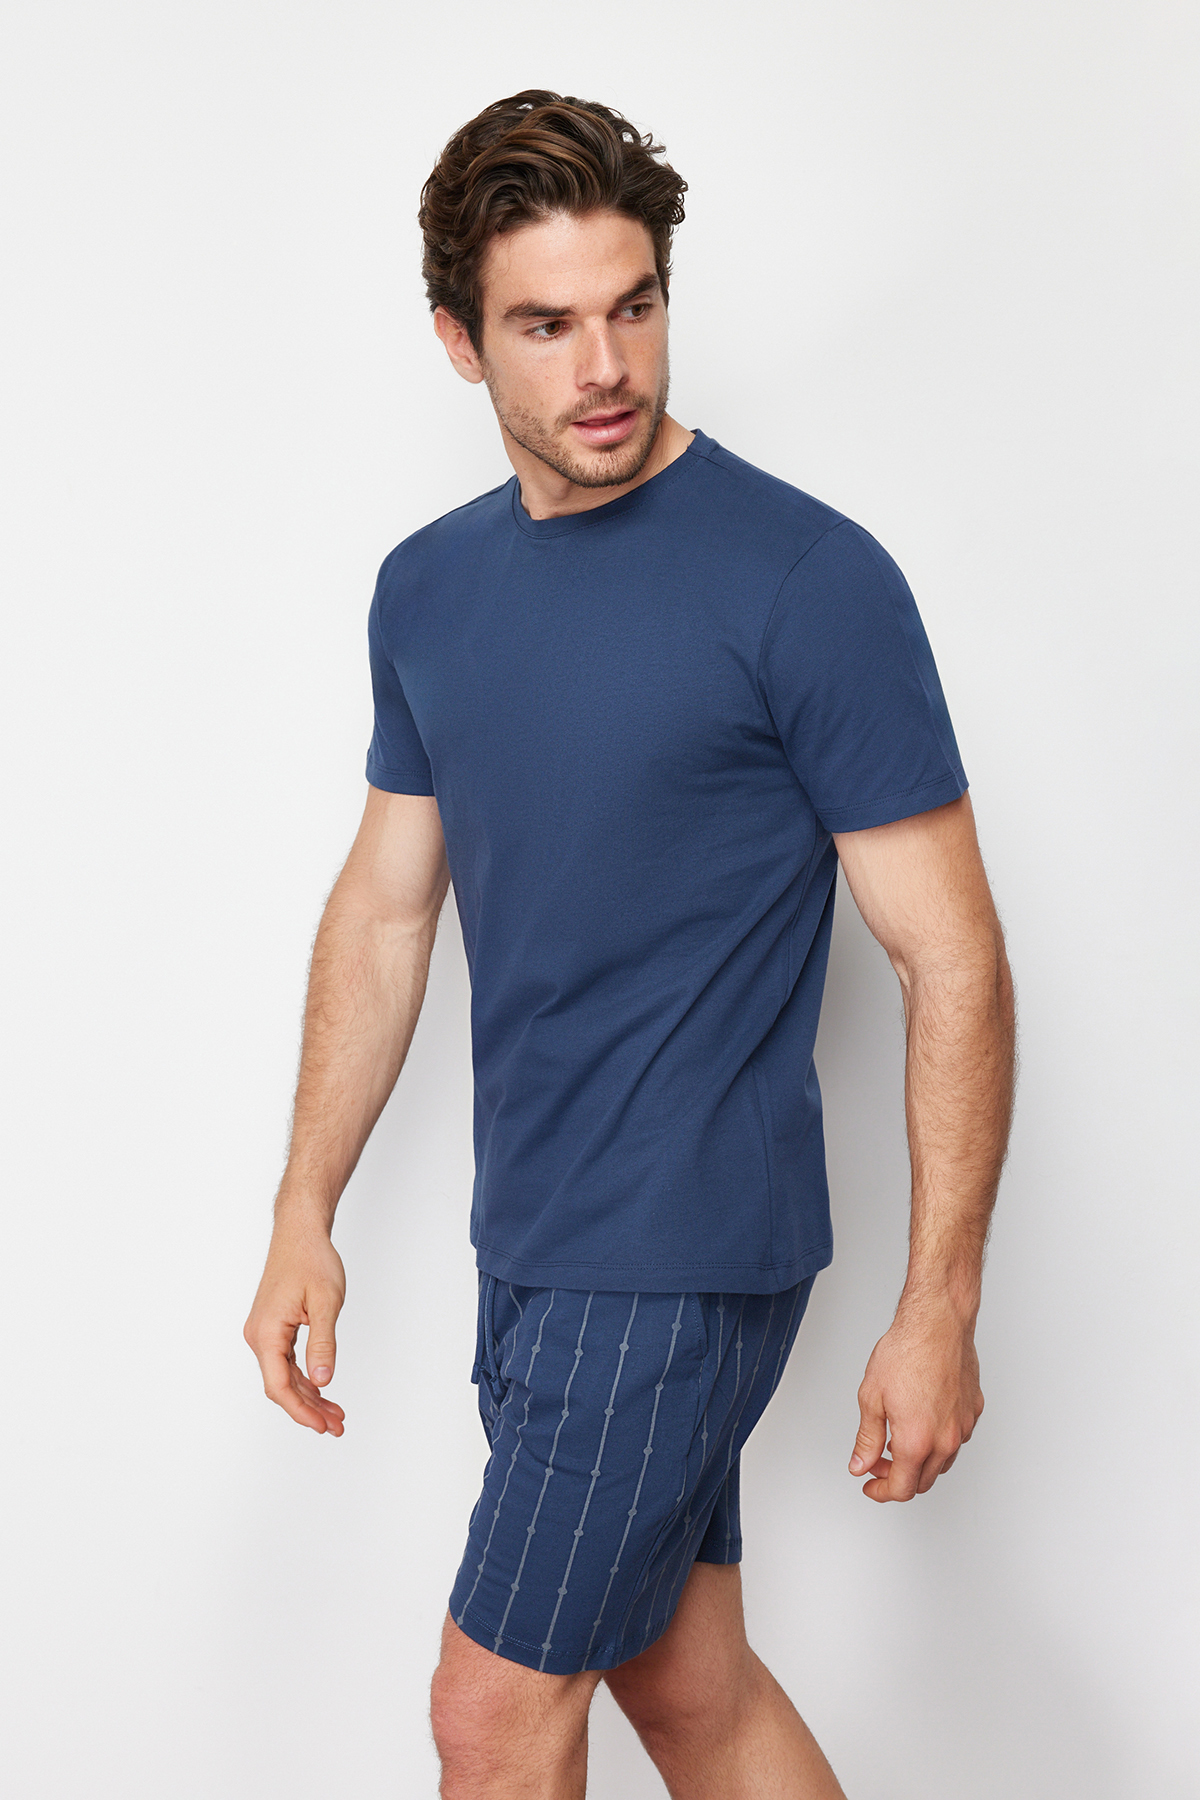 Trendyol Men's Navy Blue Printed Regular Fit Knitted Pajamas Set